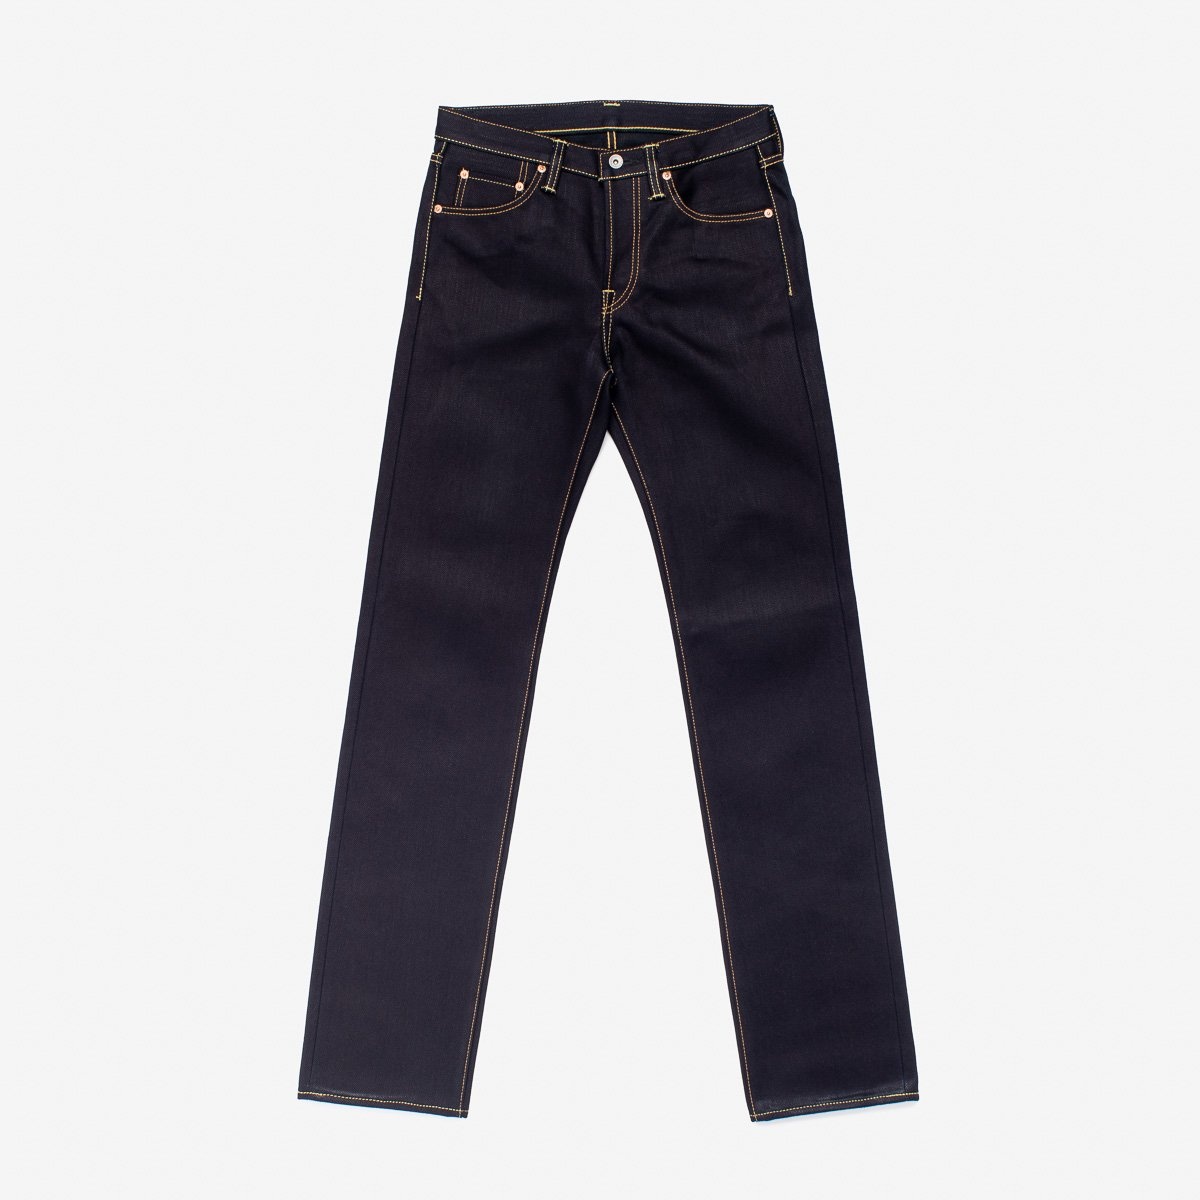 IH-666-XHSib 25oz Selvedge Denim Slim Straight Cut Jeans - Indigo/Black - 1